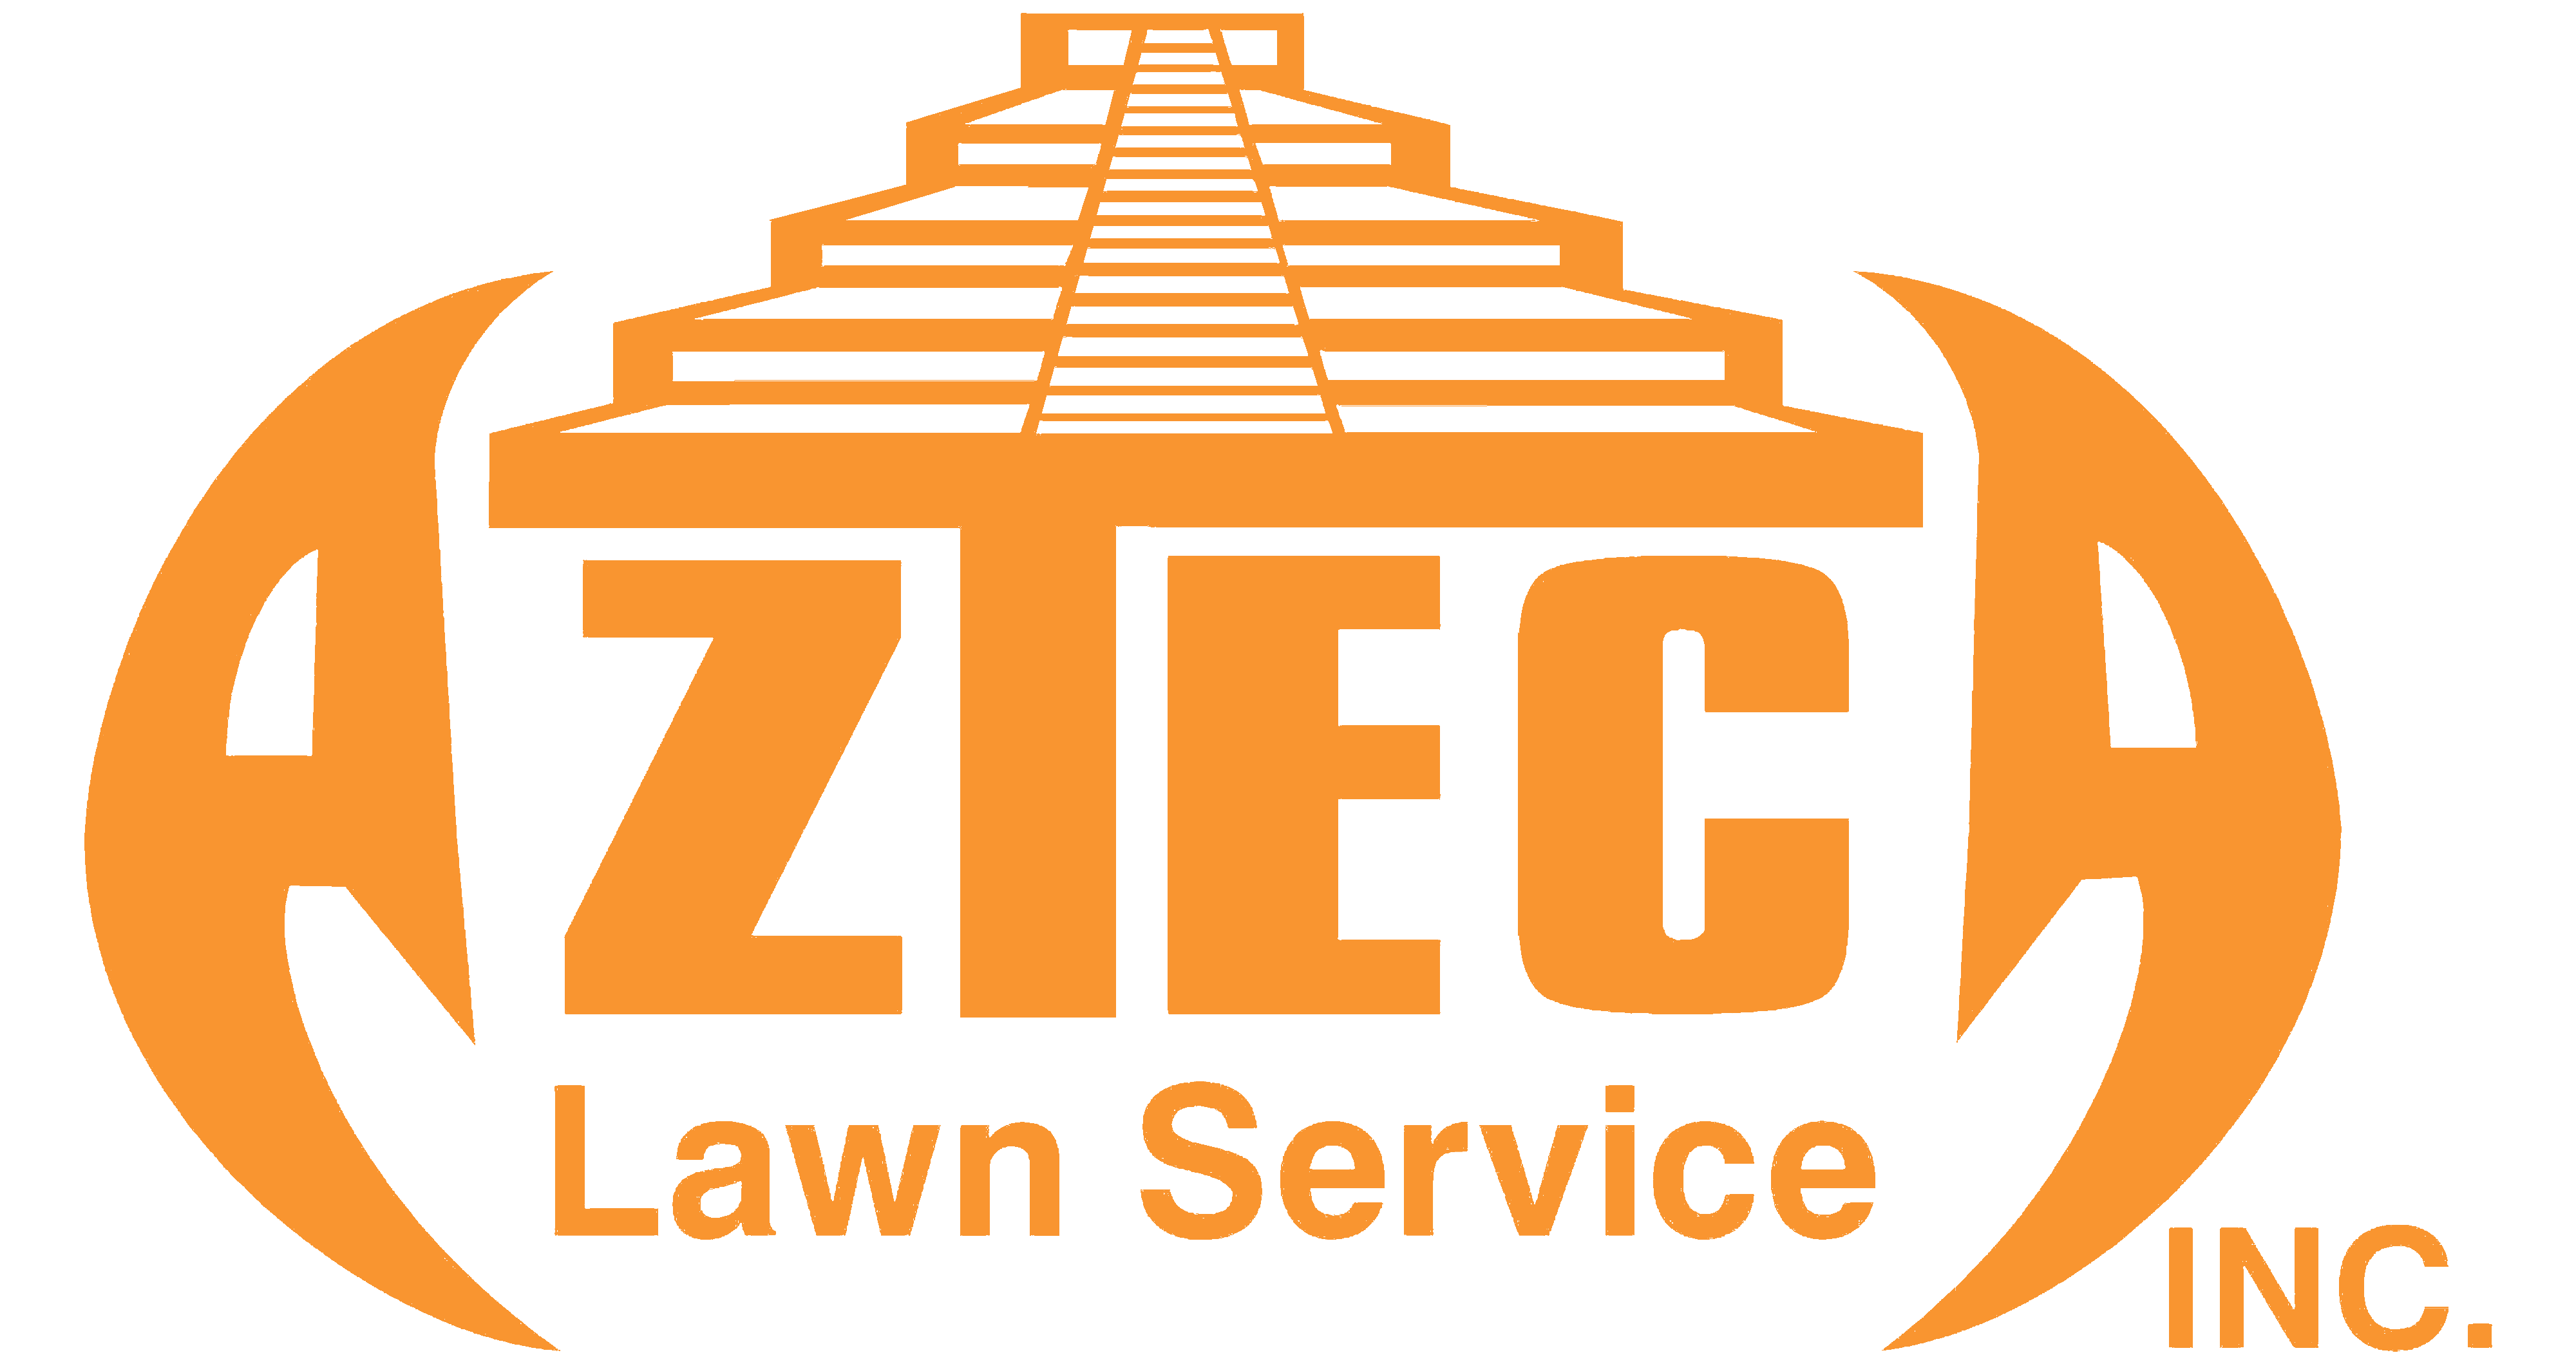 Azteca Lawn Service Inc.